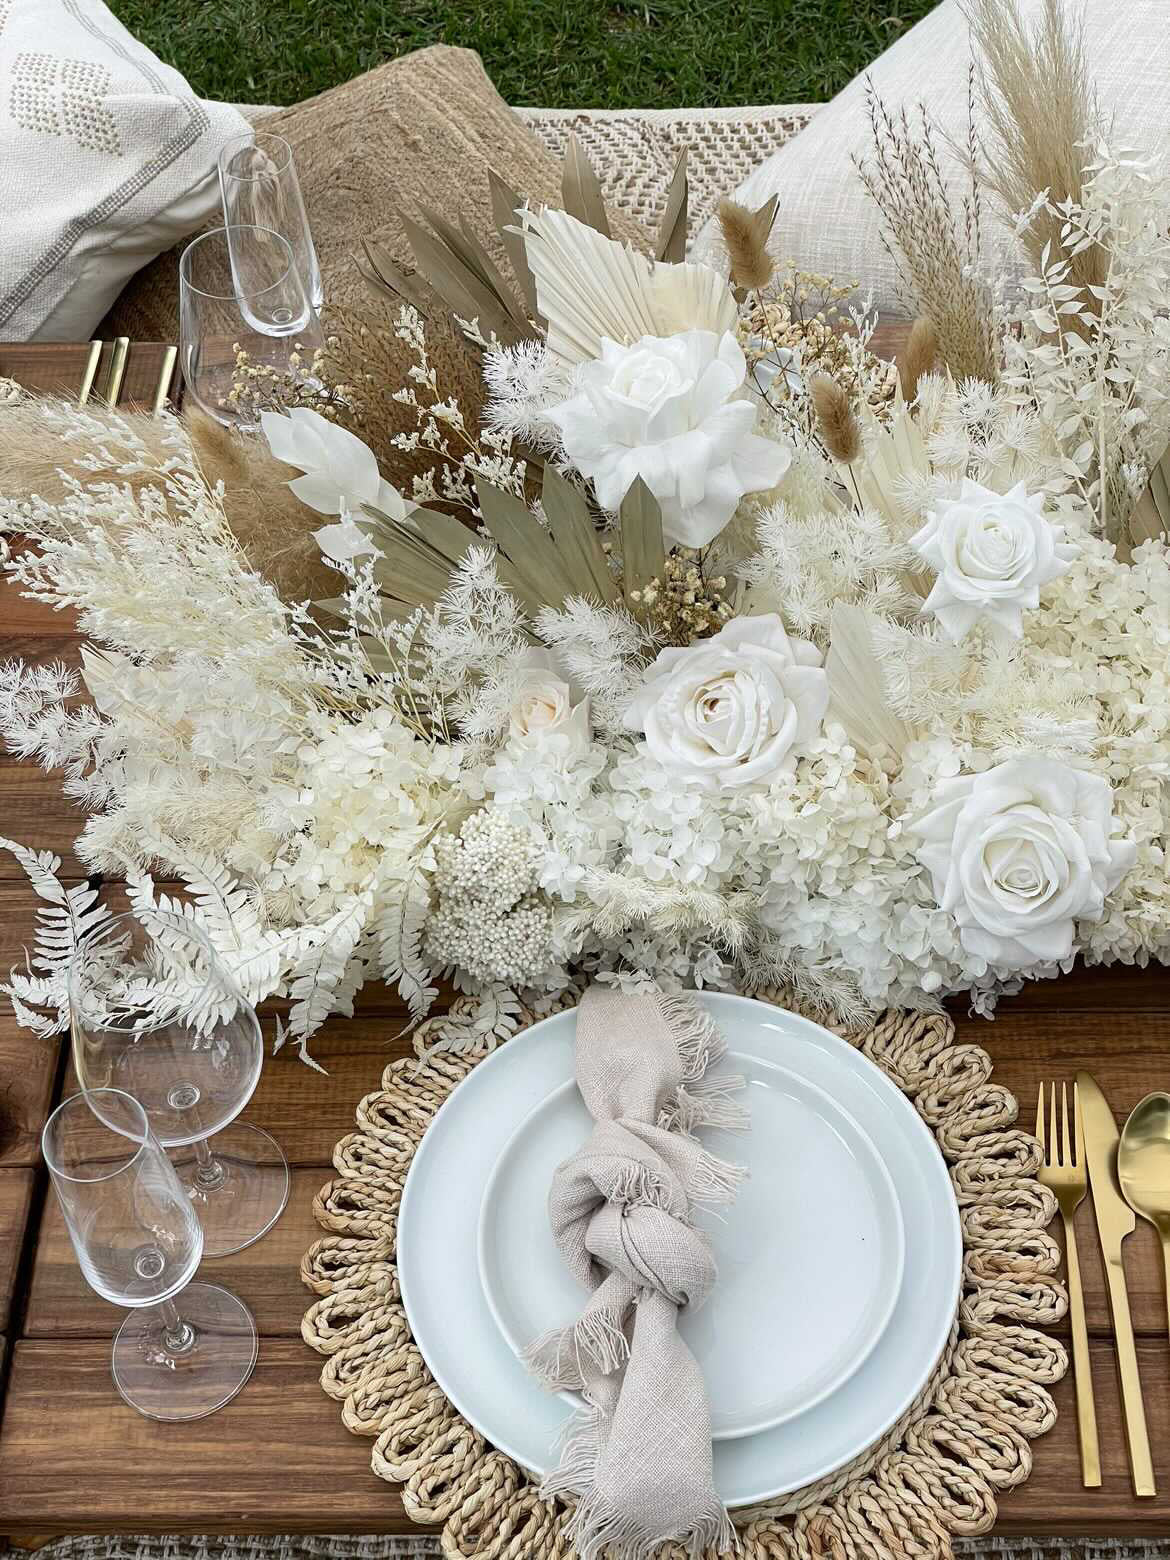 Everlasting floral table runner arrangement.